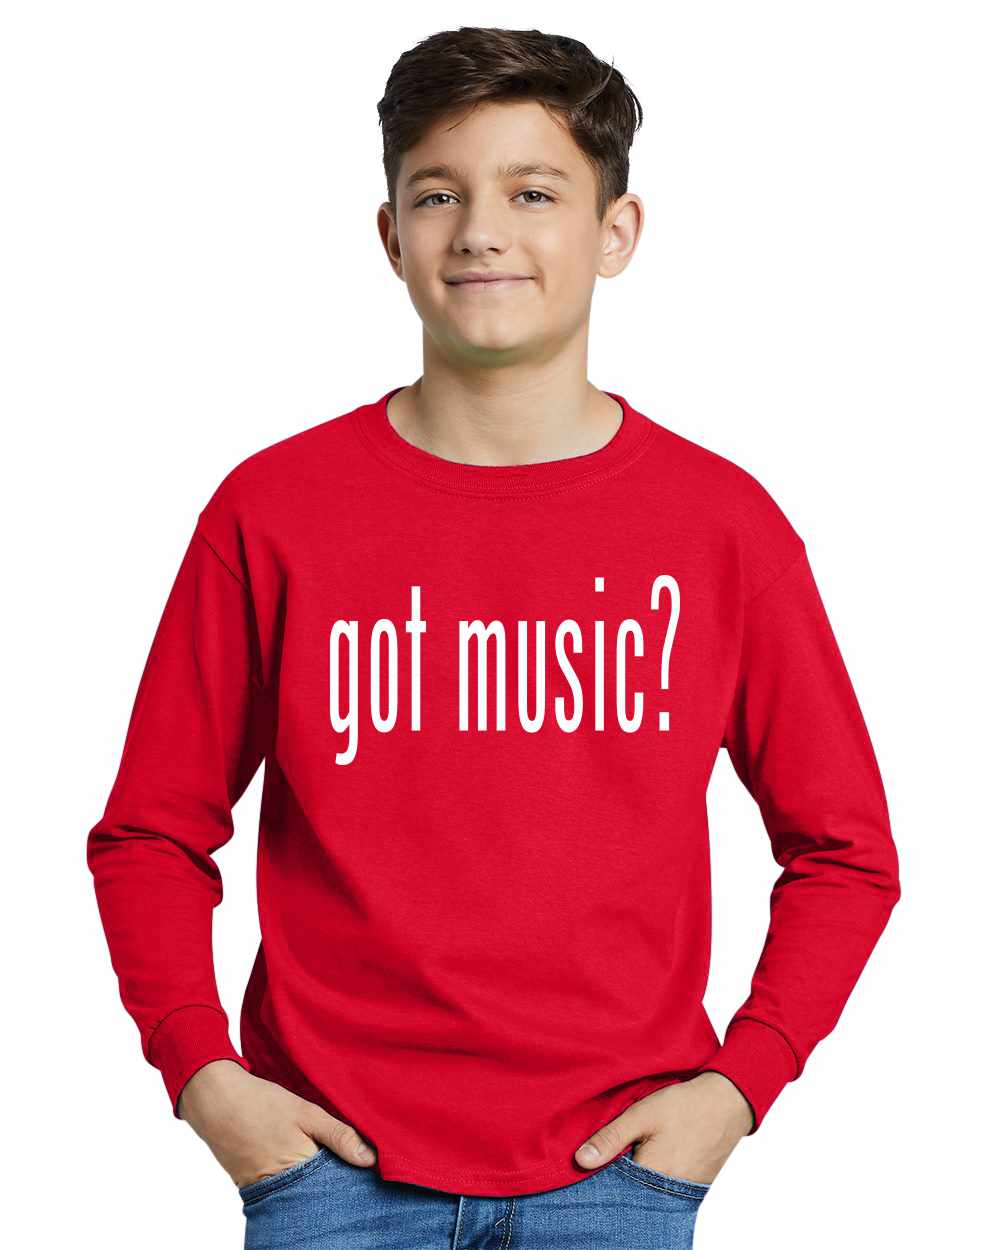 Got Music? on Youth Long Sleeve Shirt (#840-203)